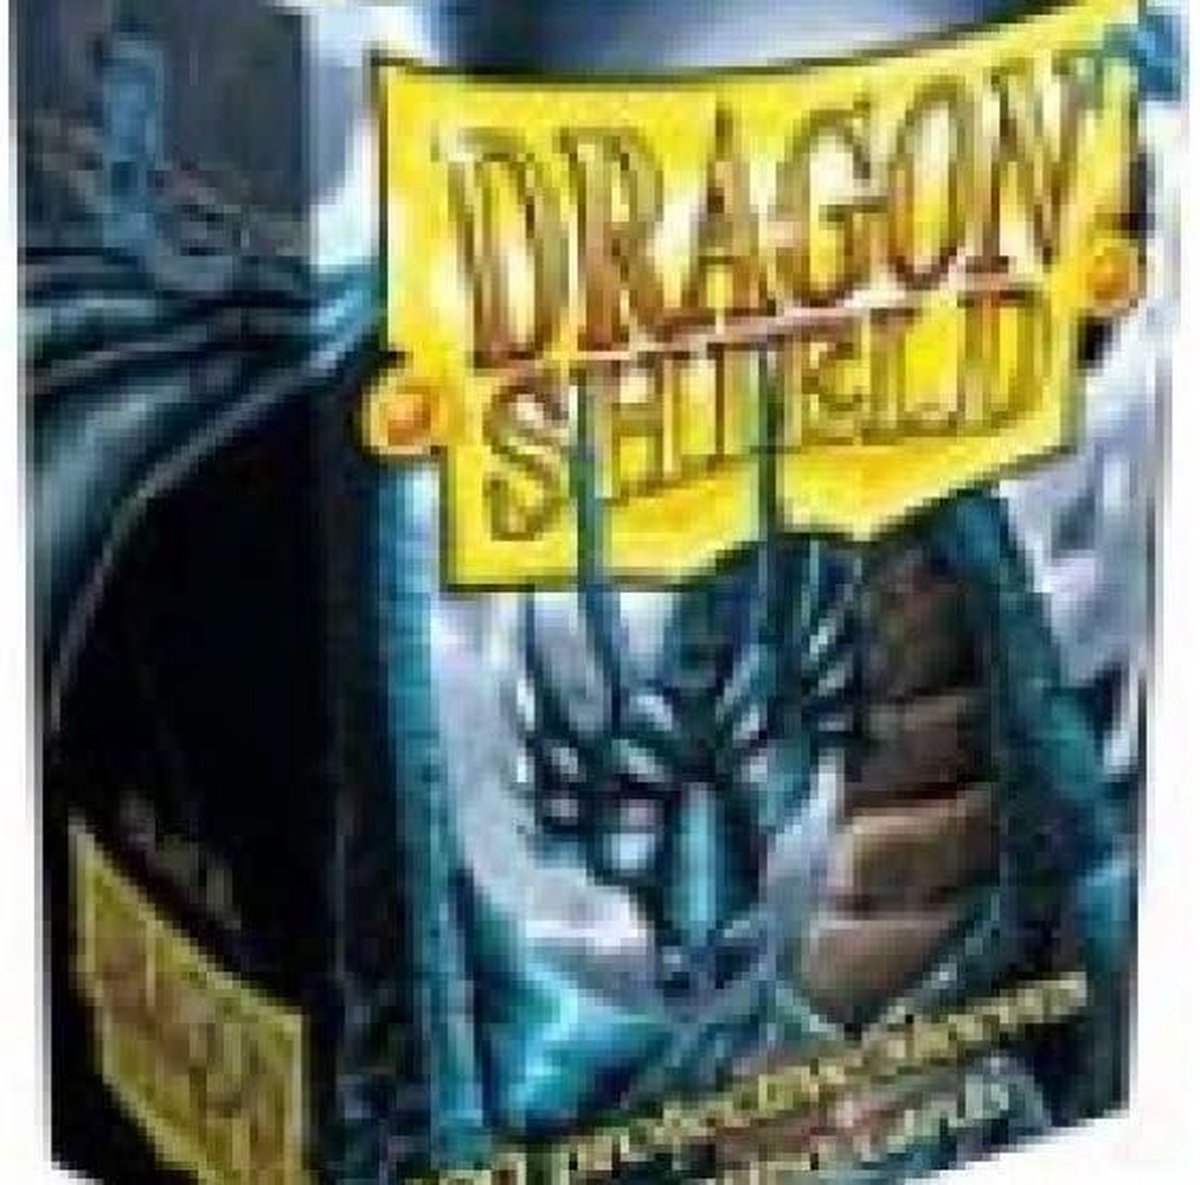 Asmodee Dragon Shield Classic - Black 100 stuks